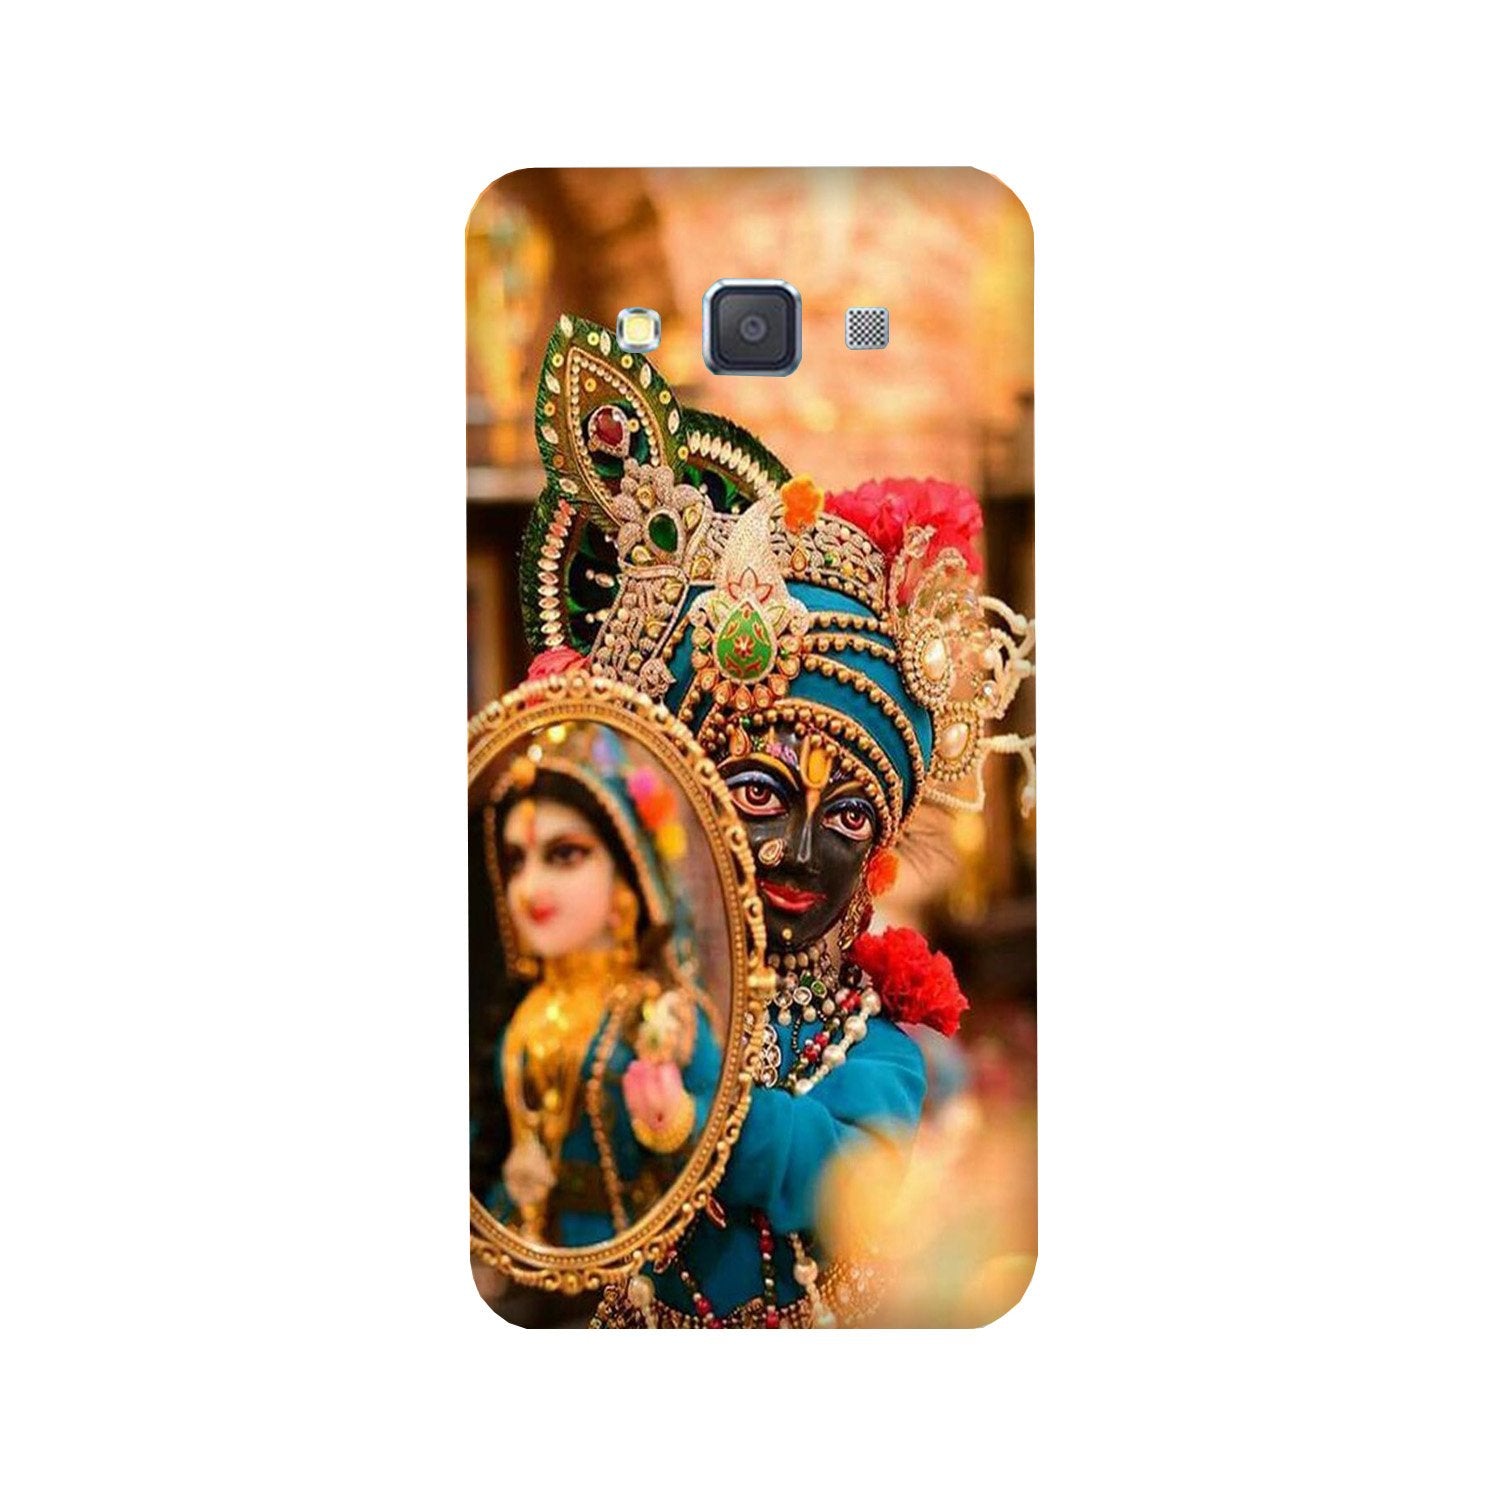 Lord Krishna5 Case for Galaxy A5 (2015)